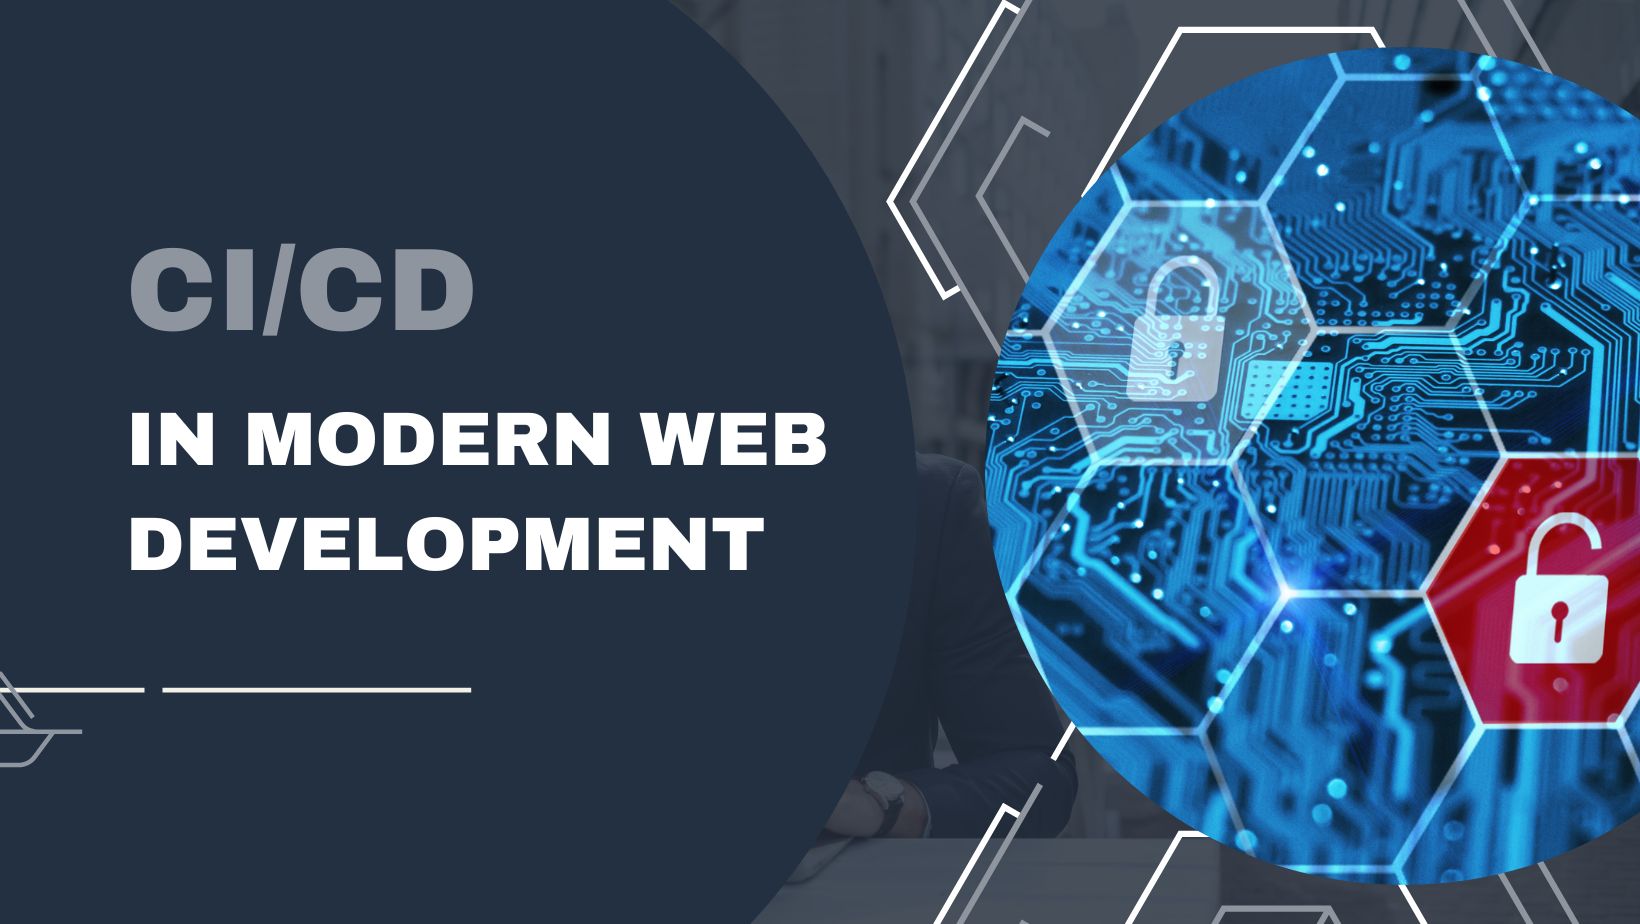 CICD) in Modern Web Development